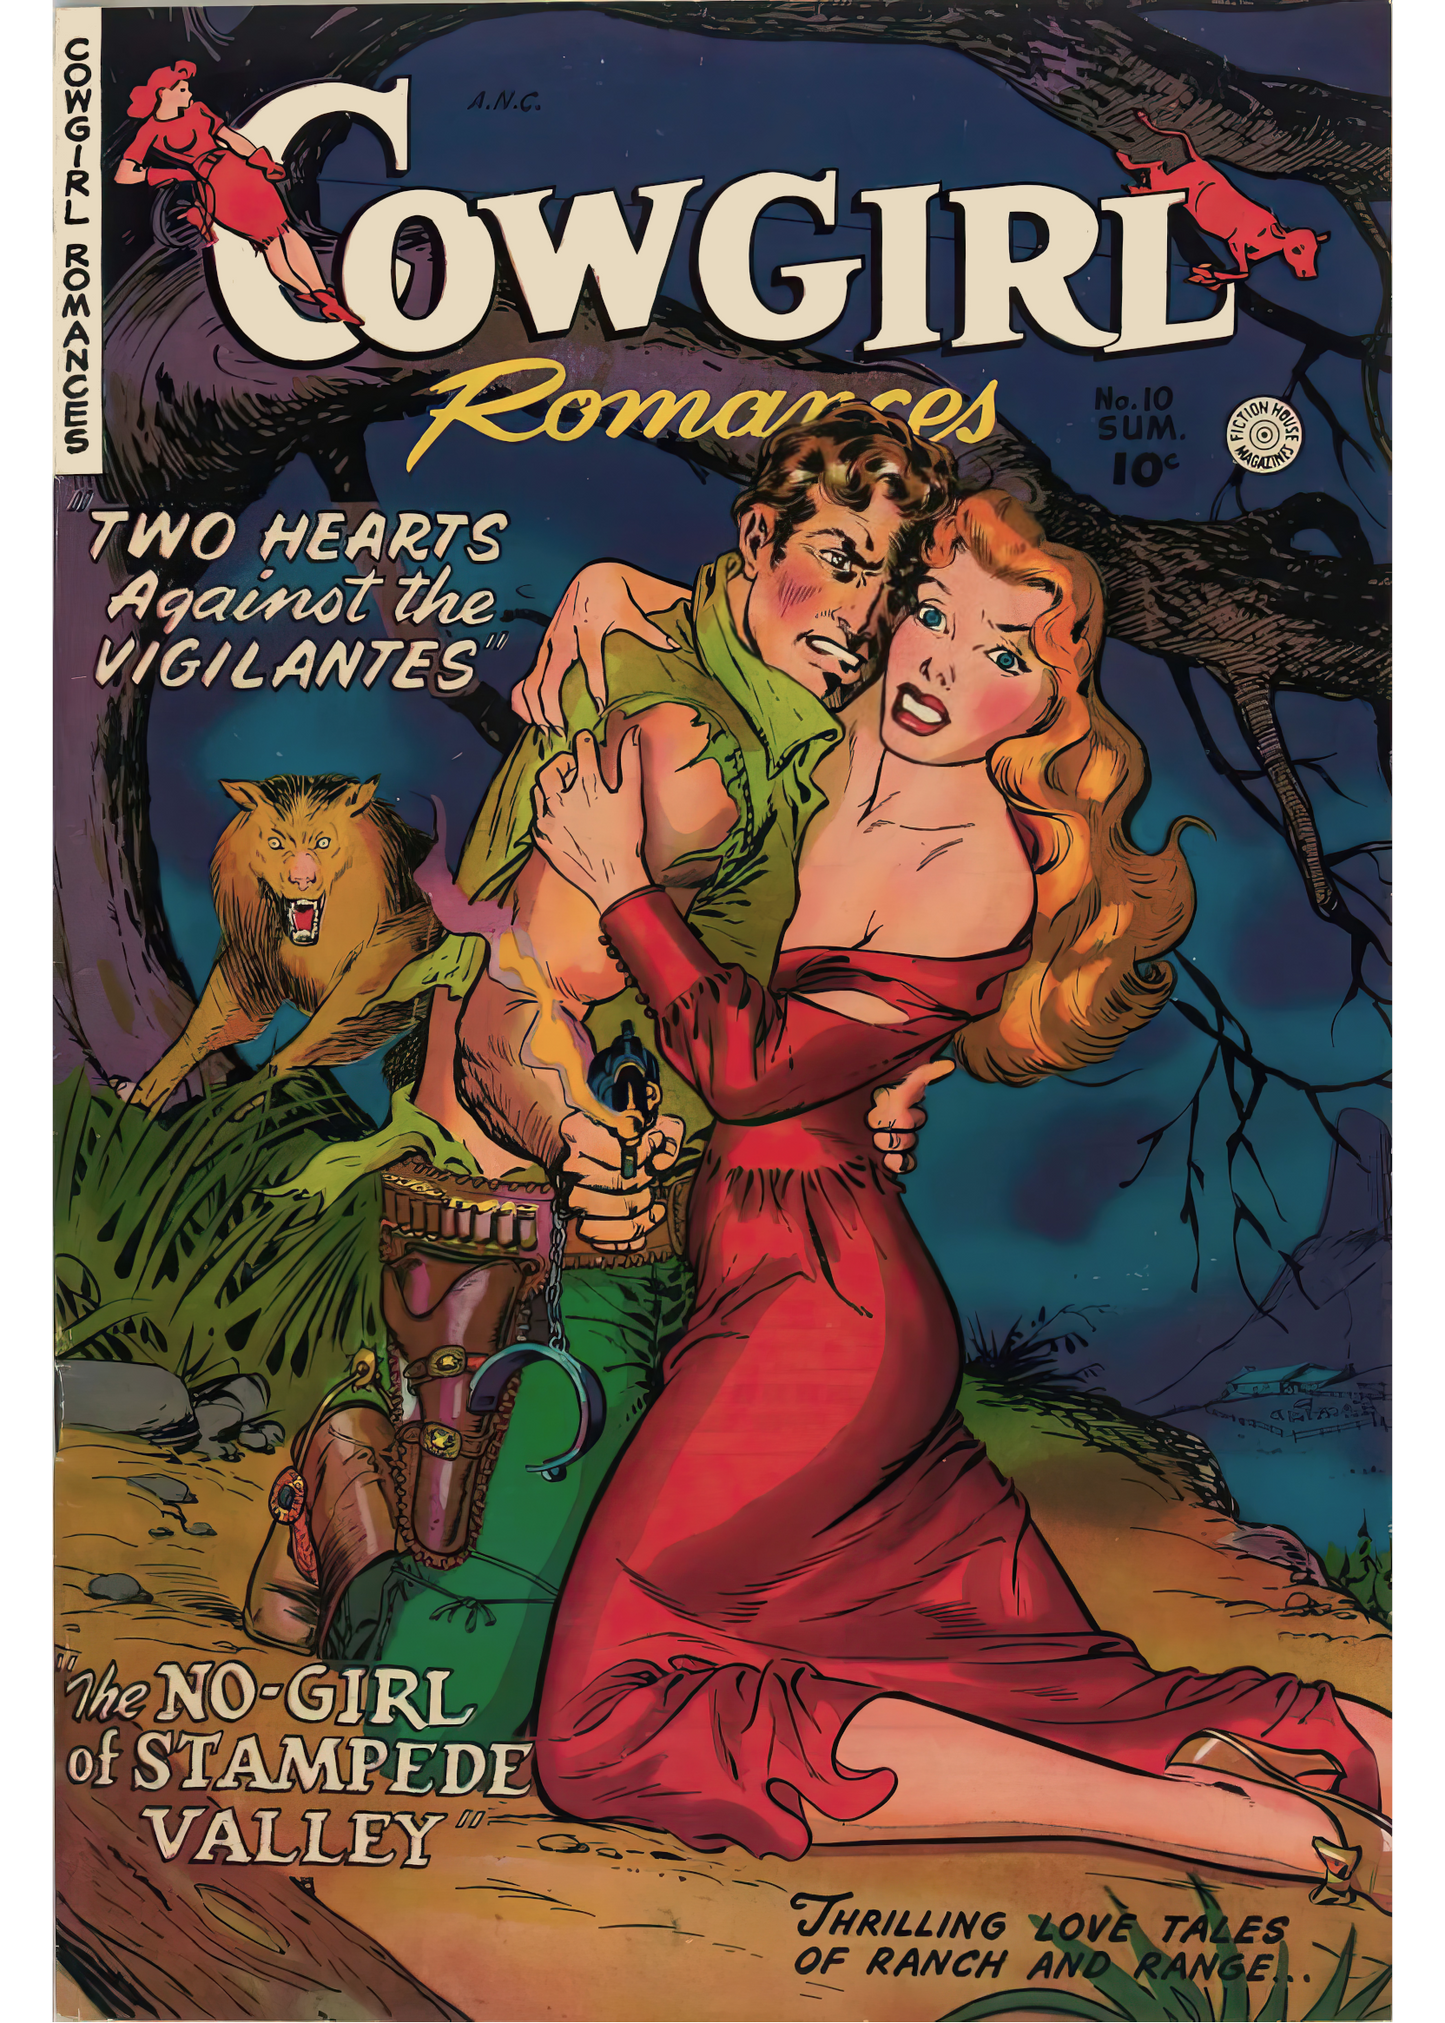 #1020 Cowgirl romances #10